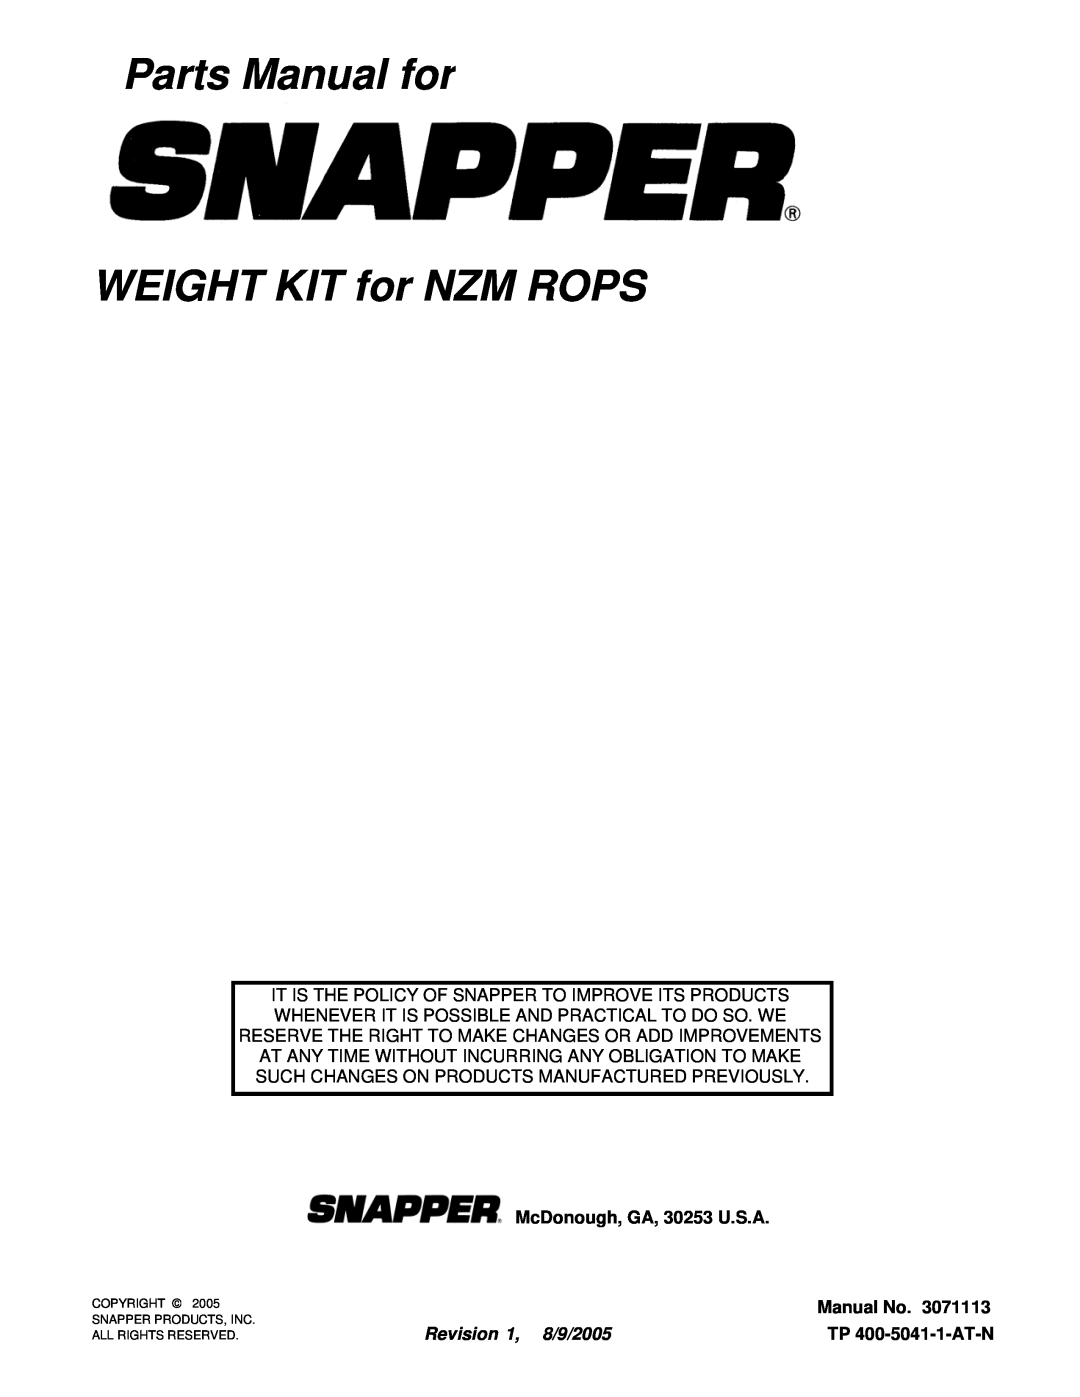 Snapper 3071113 Parts Manual for WEIGHT KIT for NZM ROPS, McDonough, GA, 30253 U.S.A, Manual No, Revision 1, 8/9/2005 